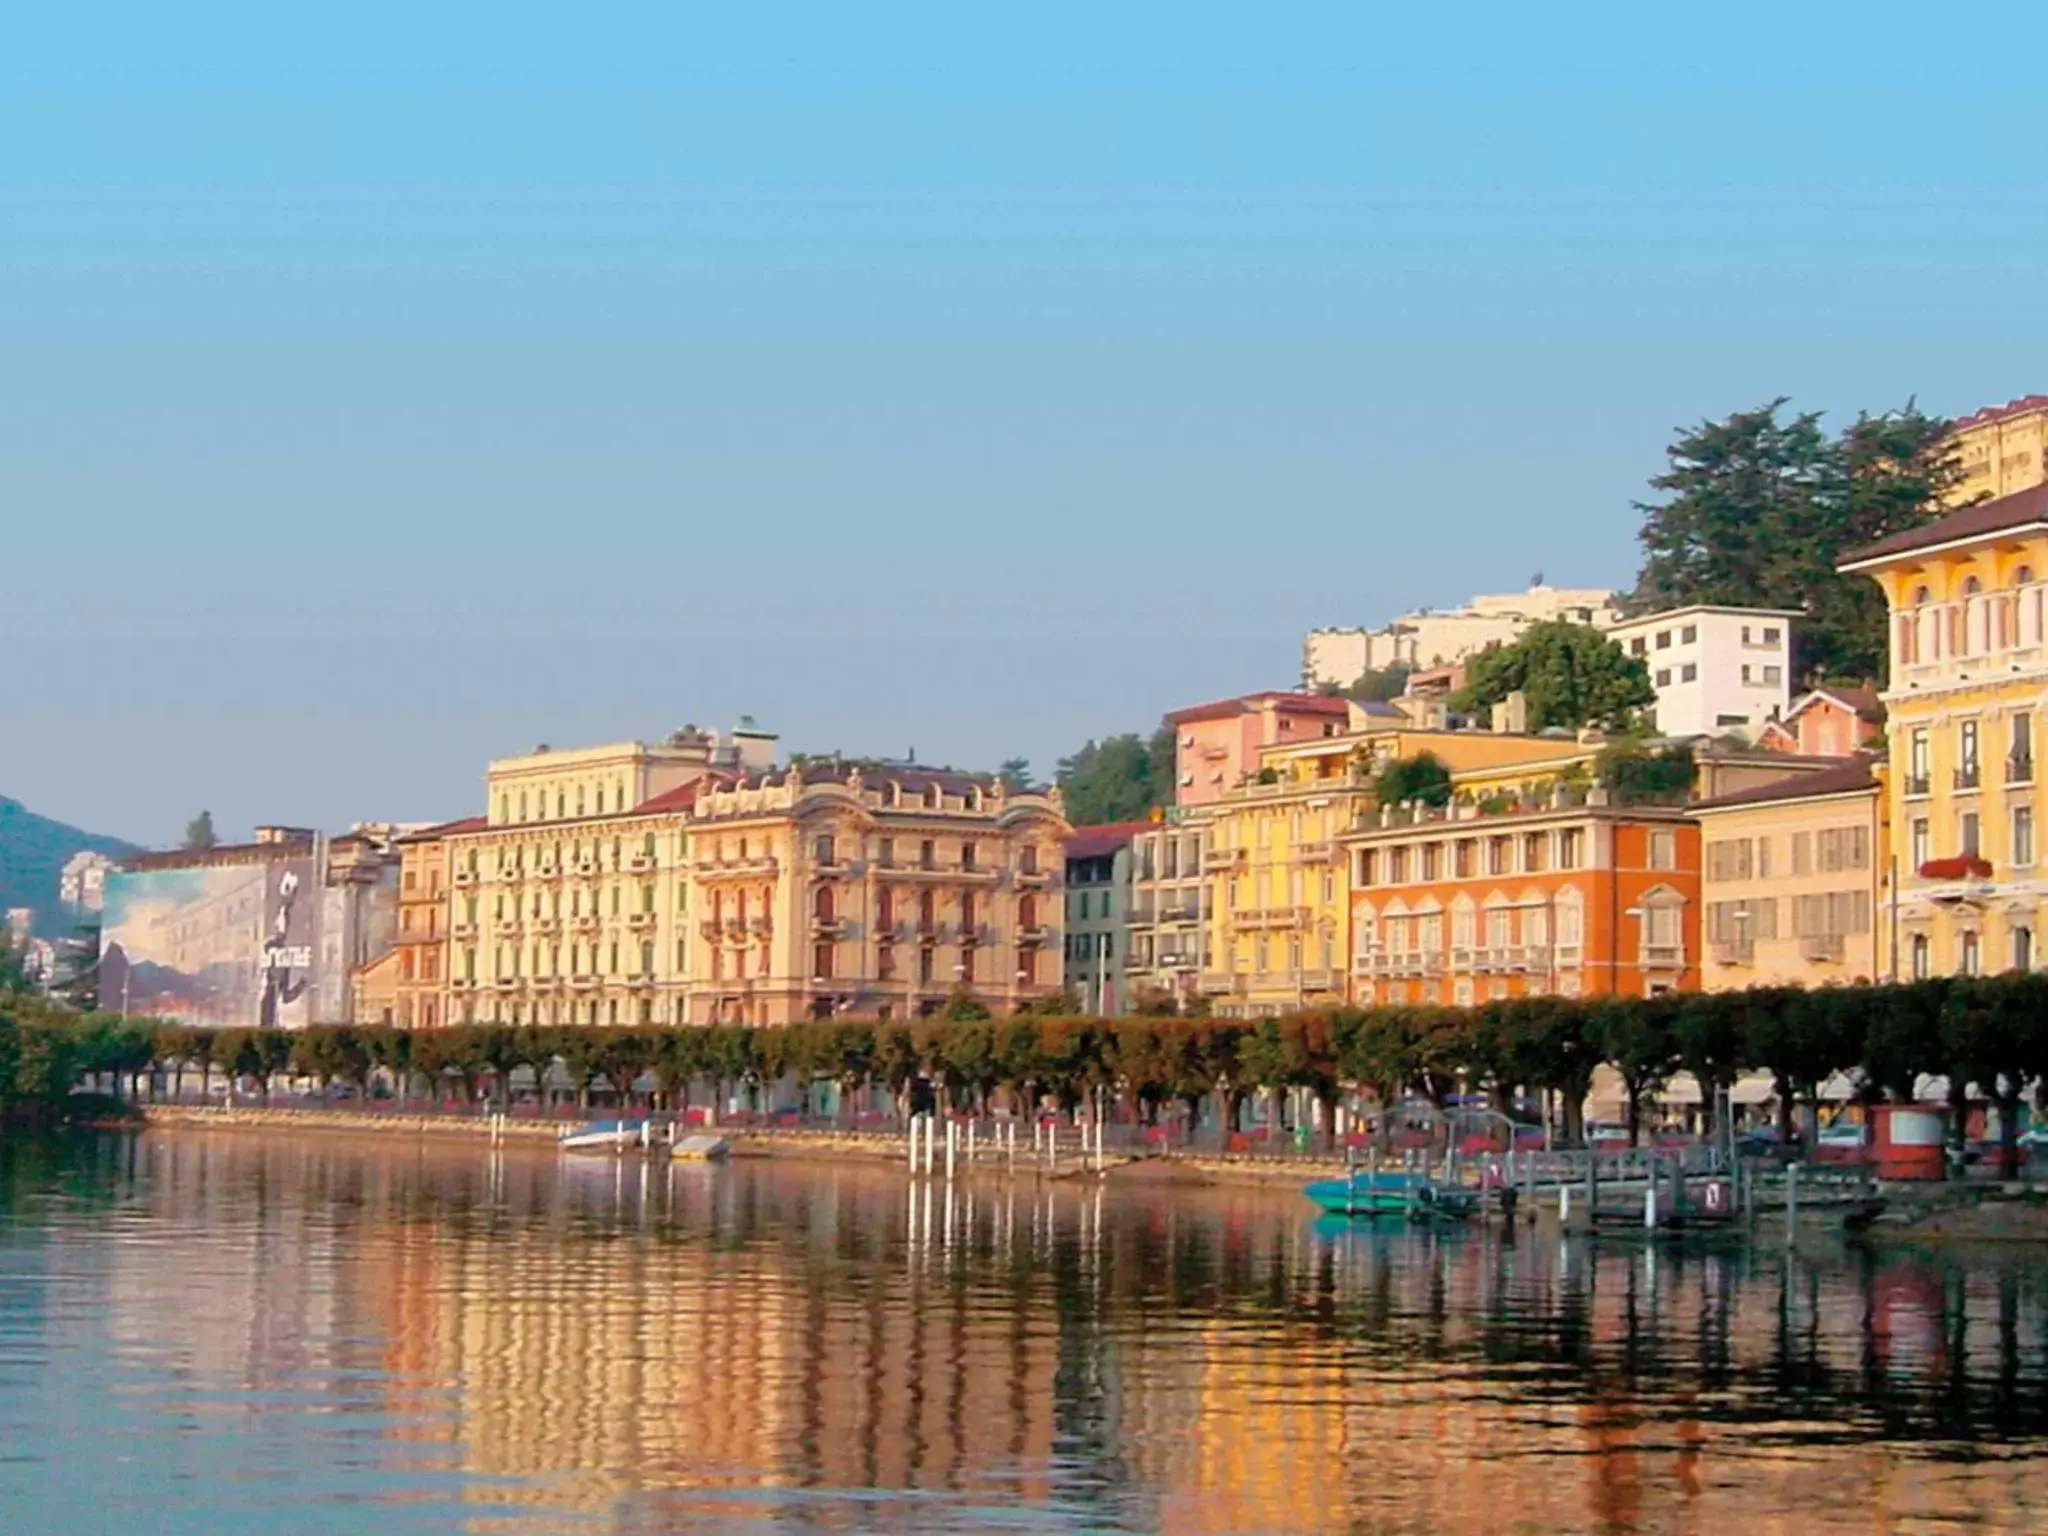 Area and facilities in Hotel City Lugano